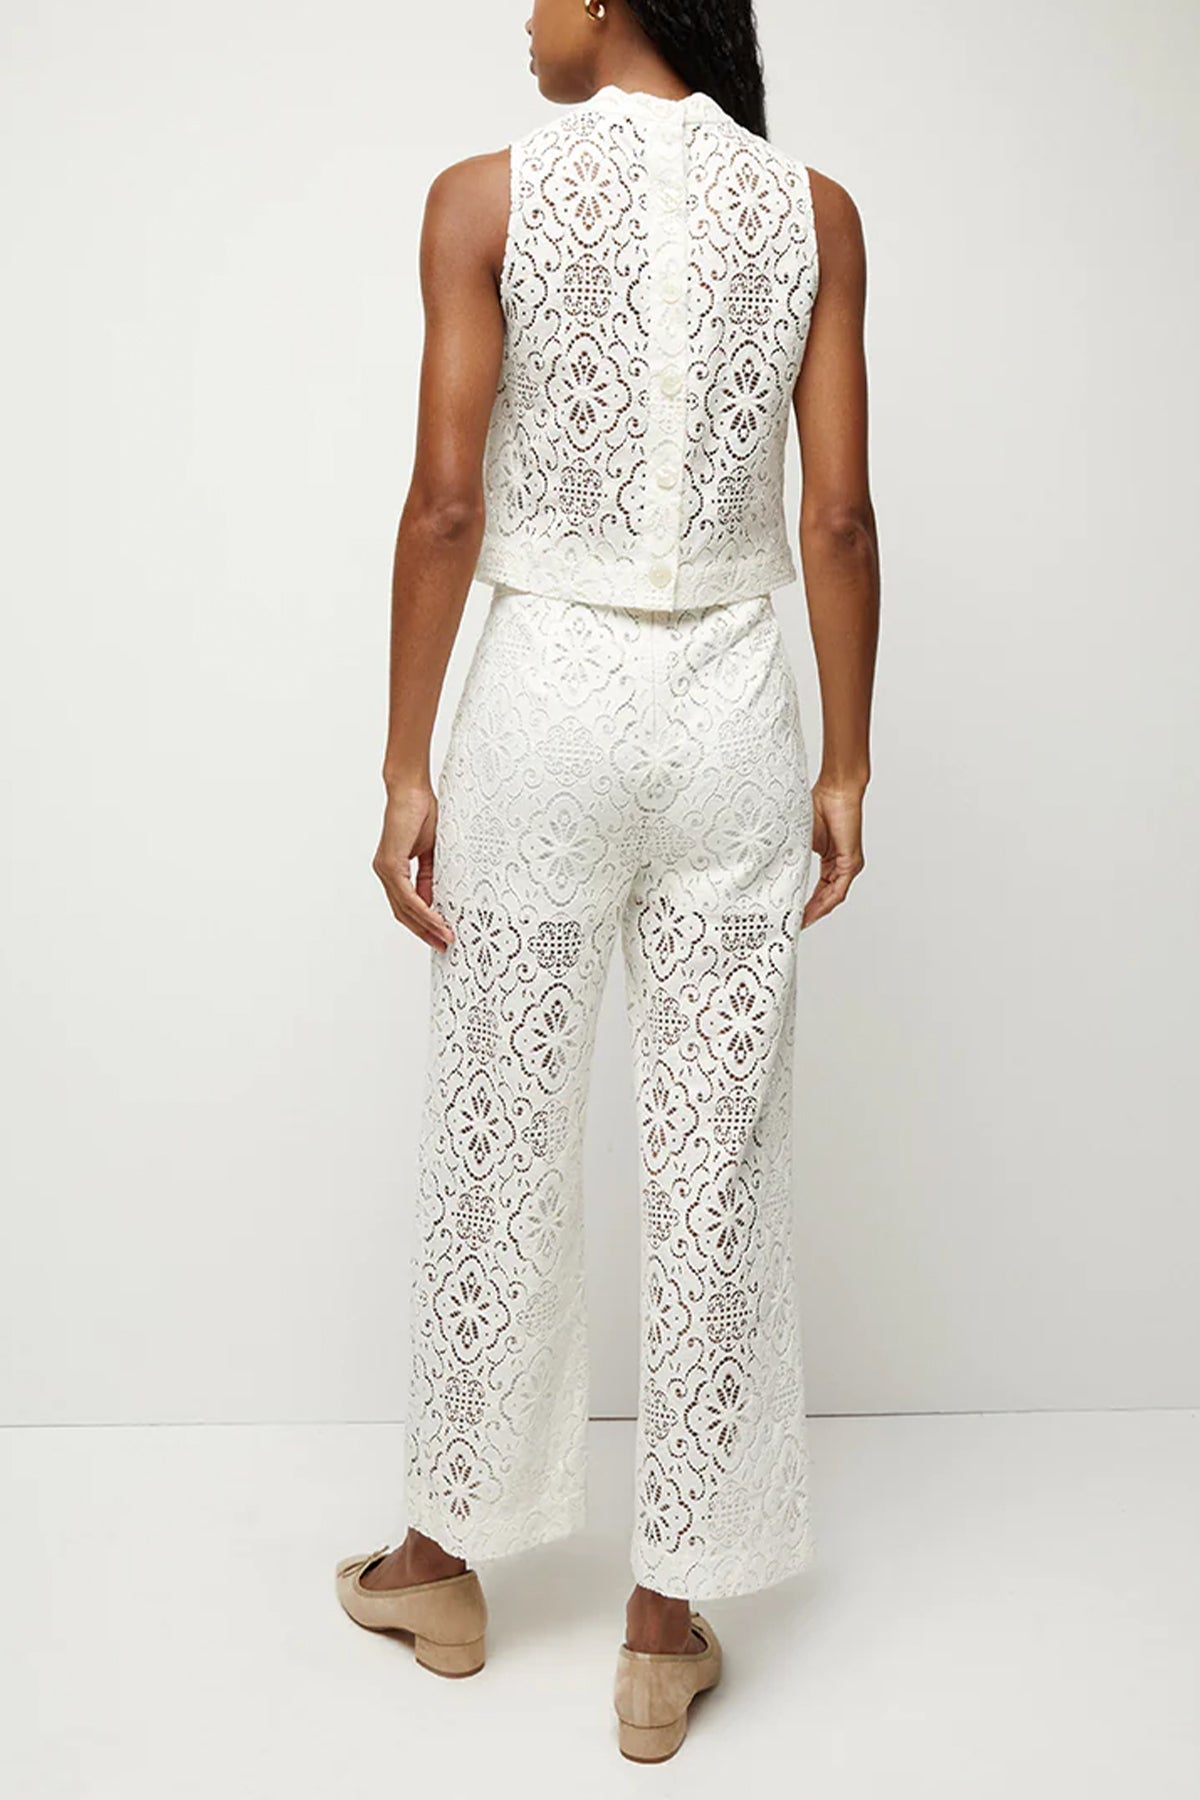 Kehlani Lace Pant in Off White - shop-olivia.com